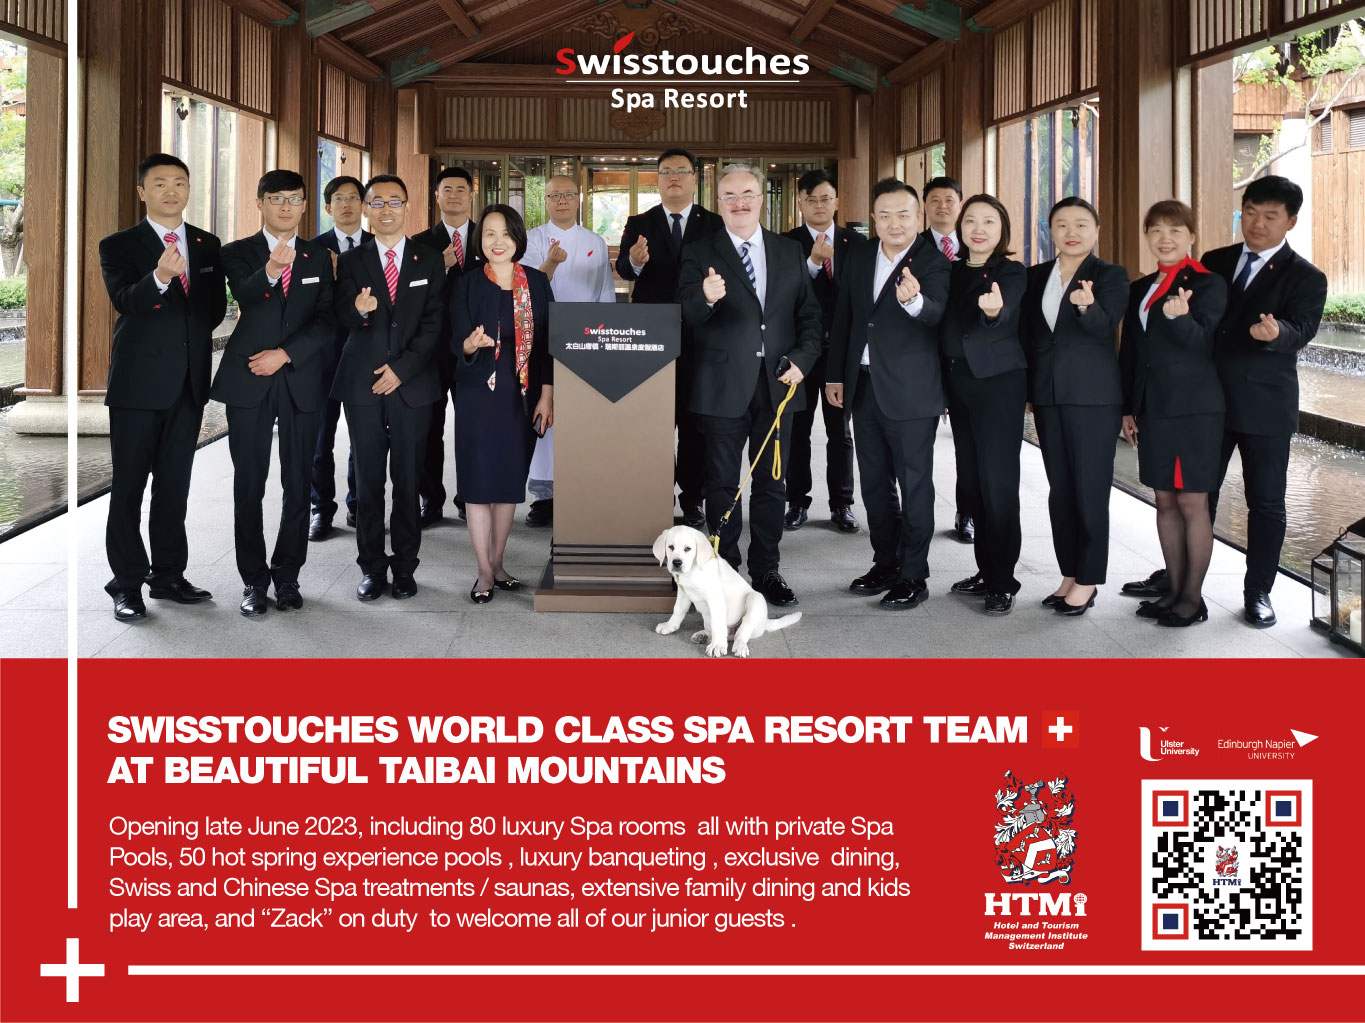 Swisstouches World Class Spa Resort Team at Beautiful Taibai Mountains